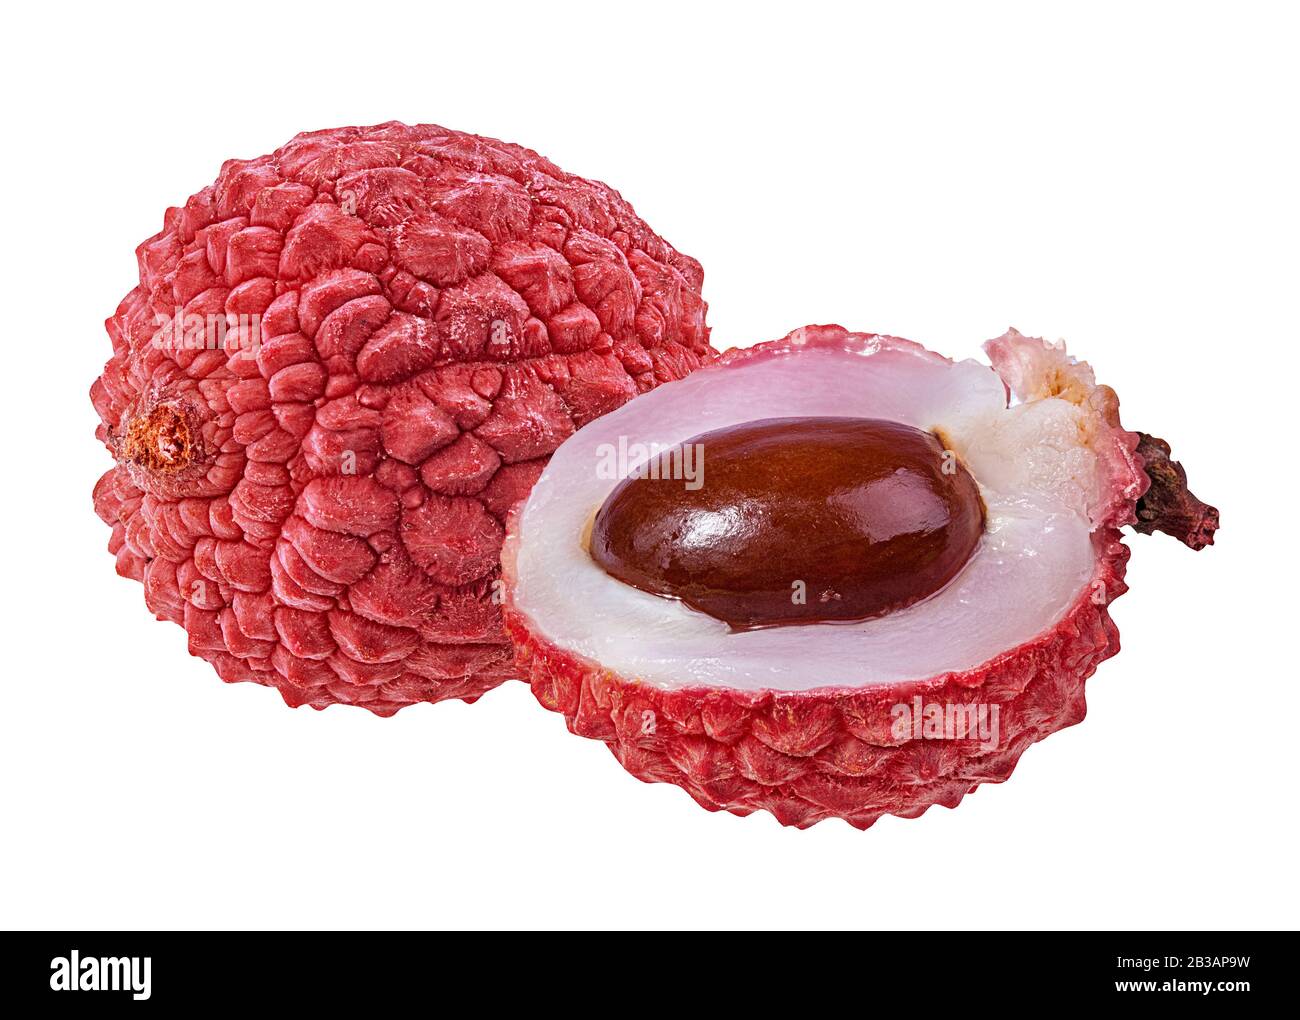 lychee isolated on white background Stock Photo